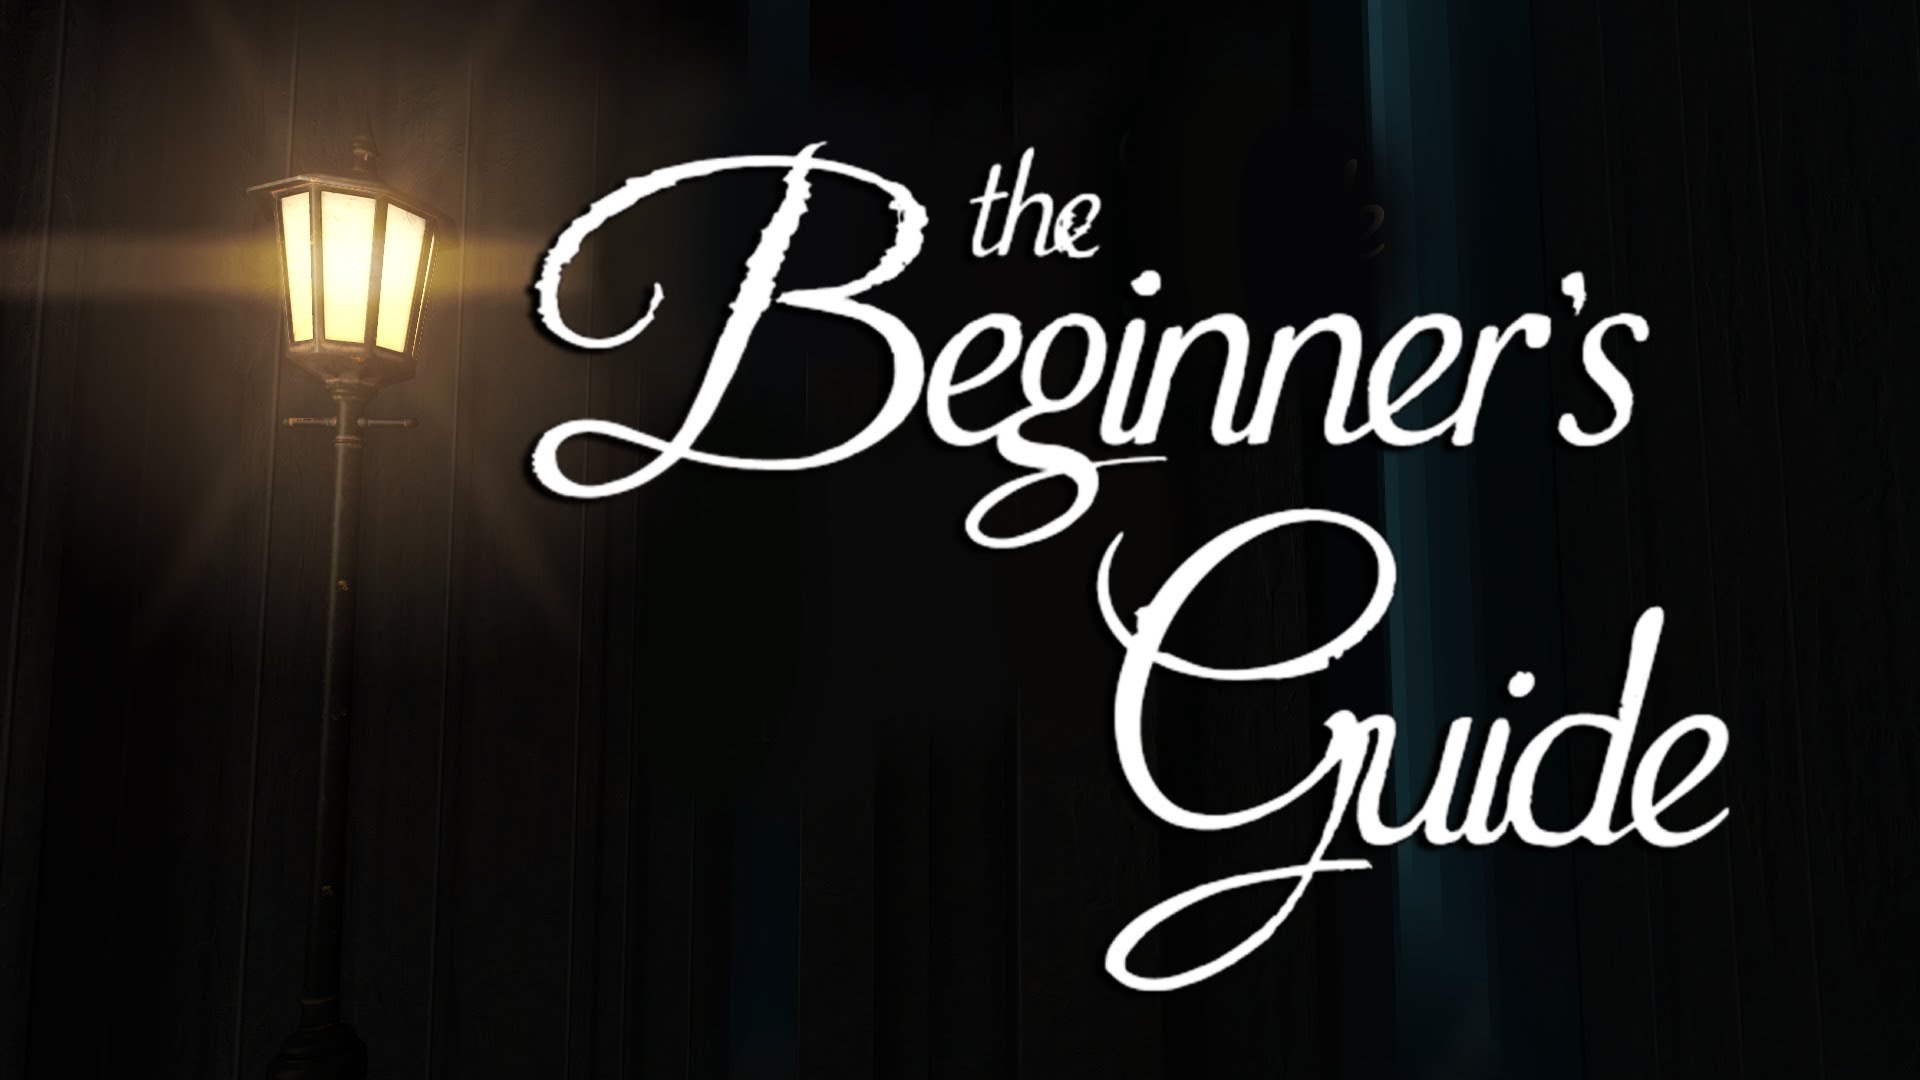 The Beginners Guide #1, Kapitel 1-7 [EN/GER, NO COMMENT]